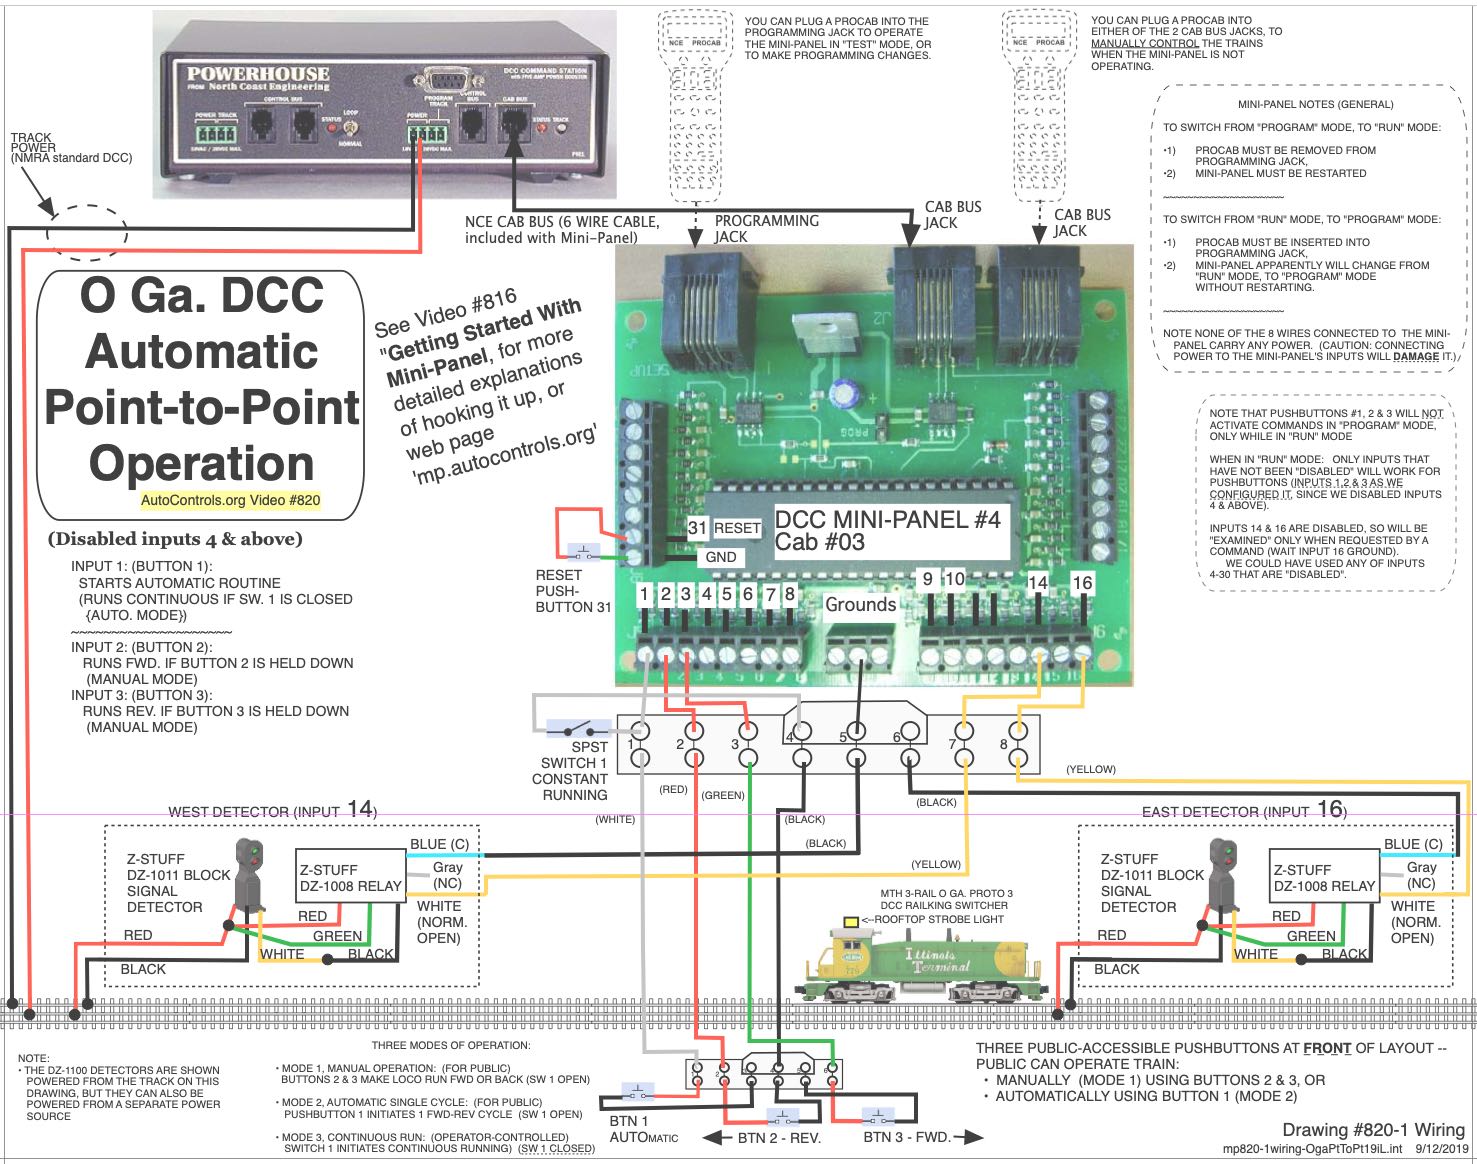 Video 823: NCE DCC Mini-Panel Automatically Controls 3-Rail O-ga. Train